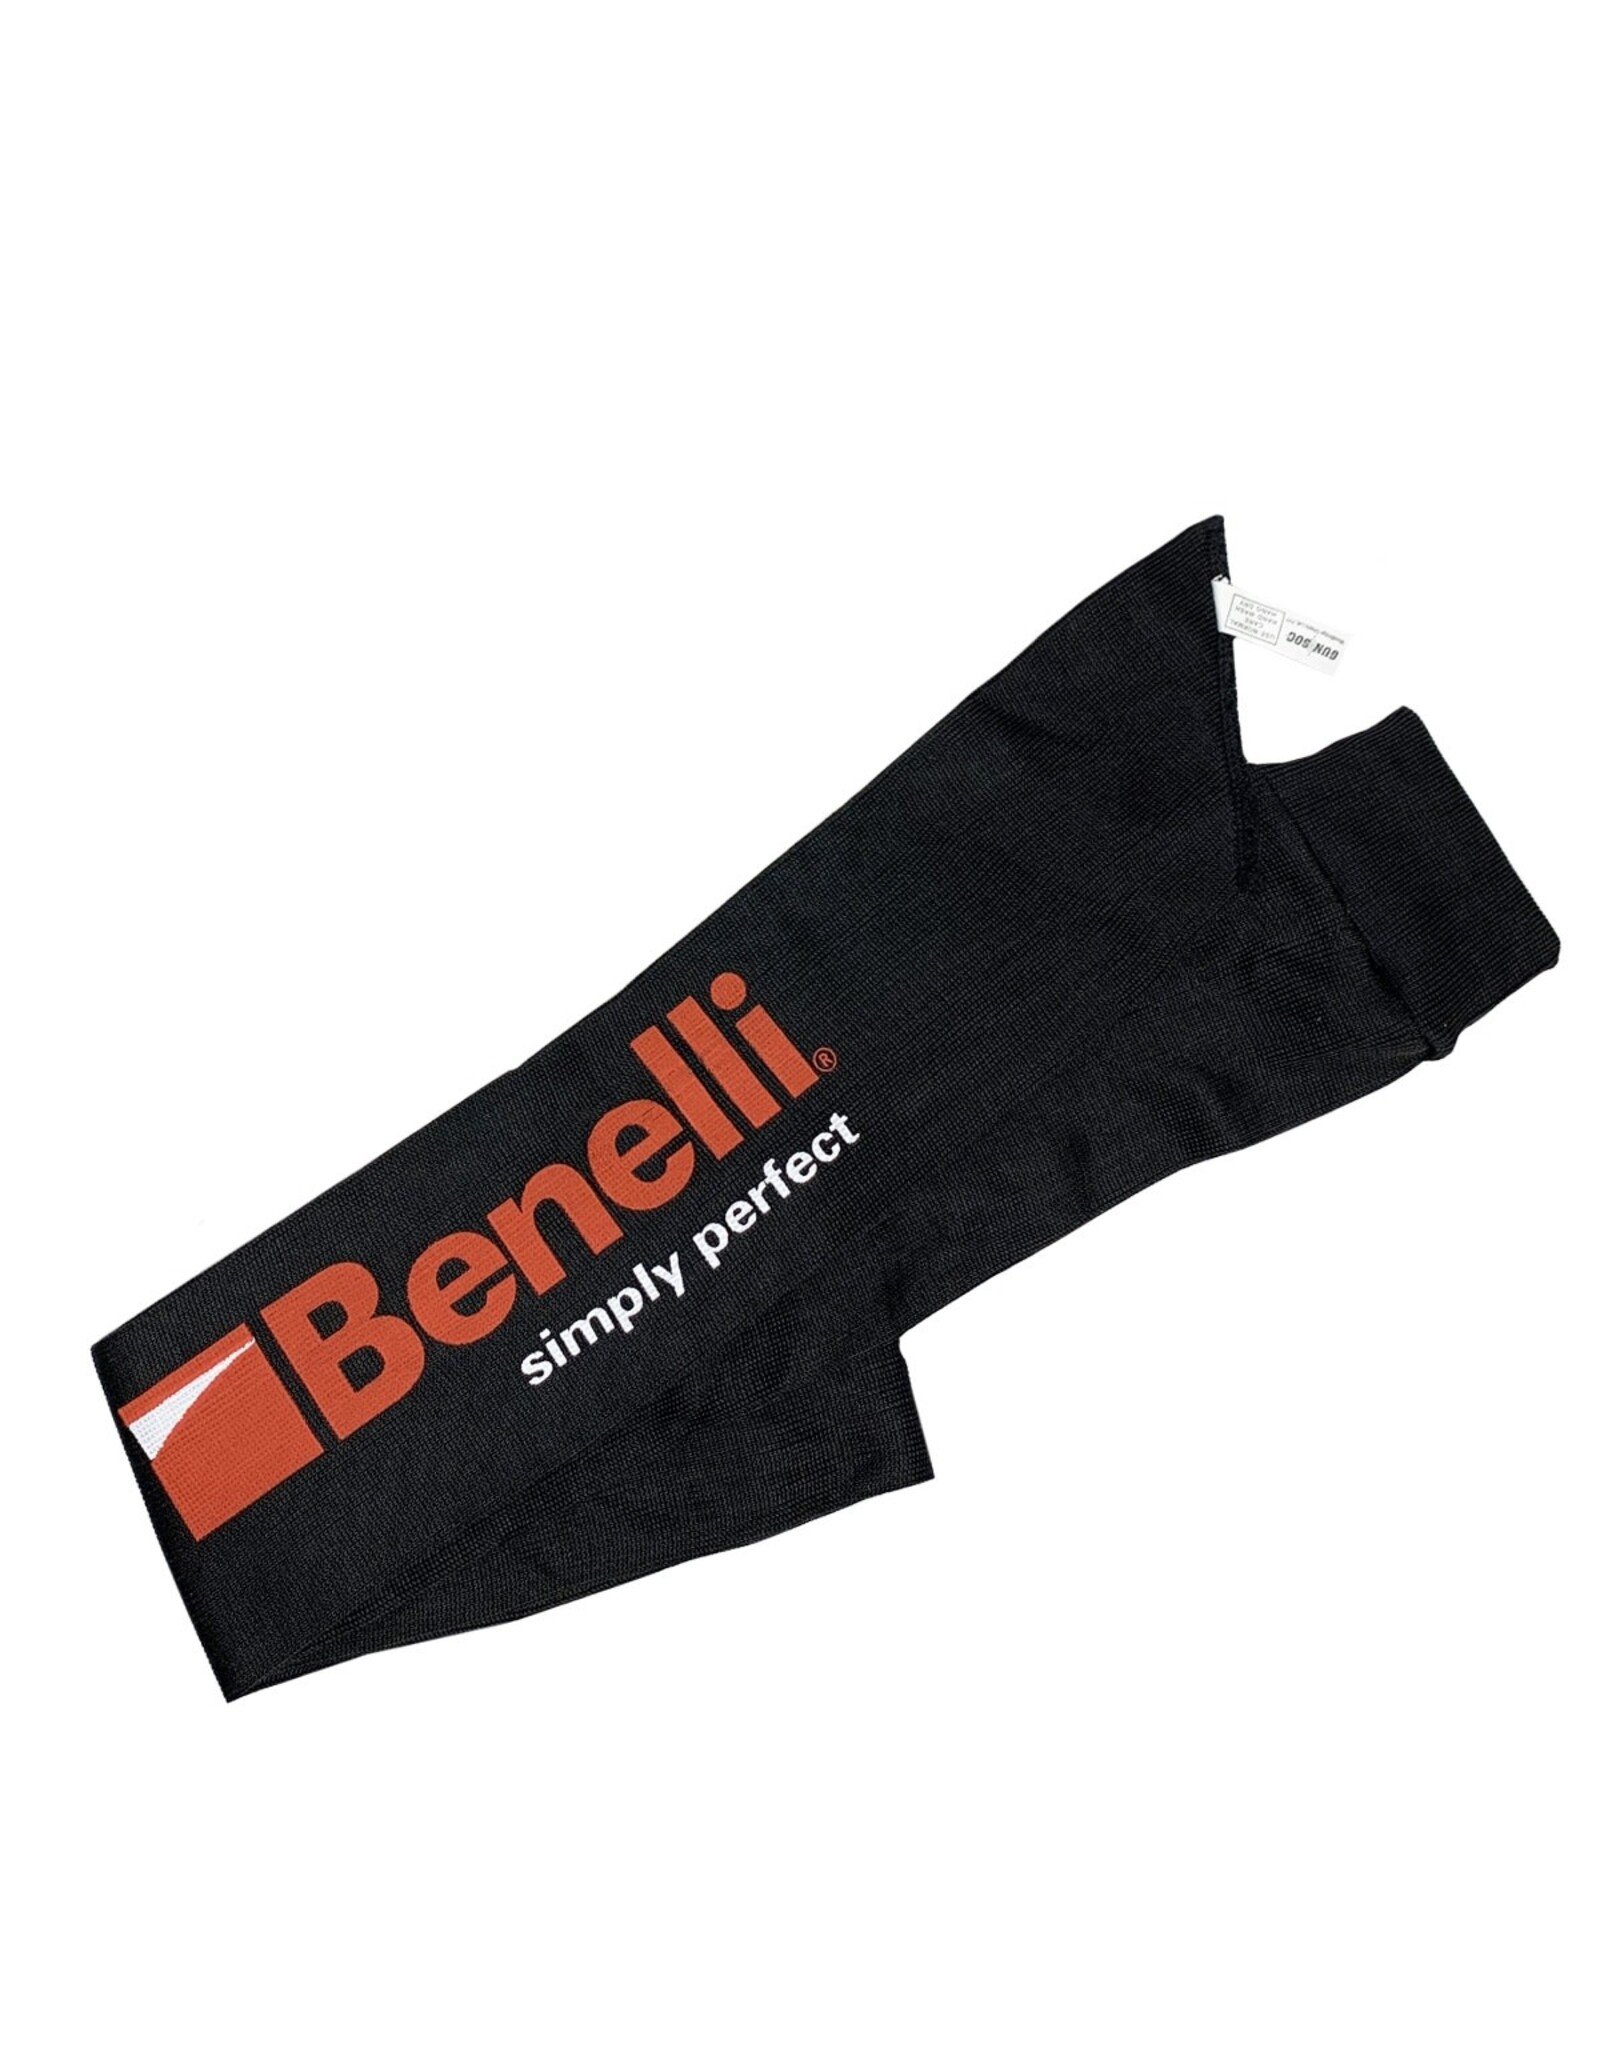 Benelli Benelli VCI Gun Sock 52in – Black